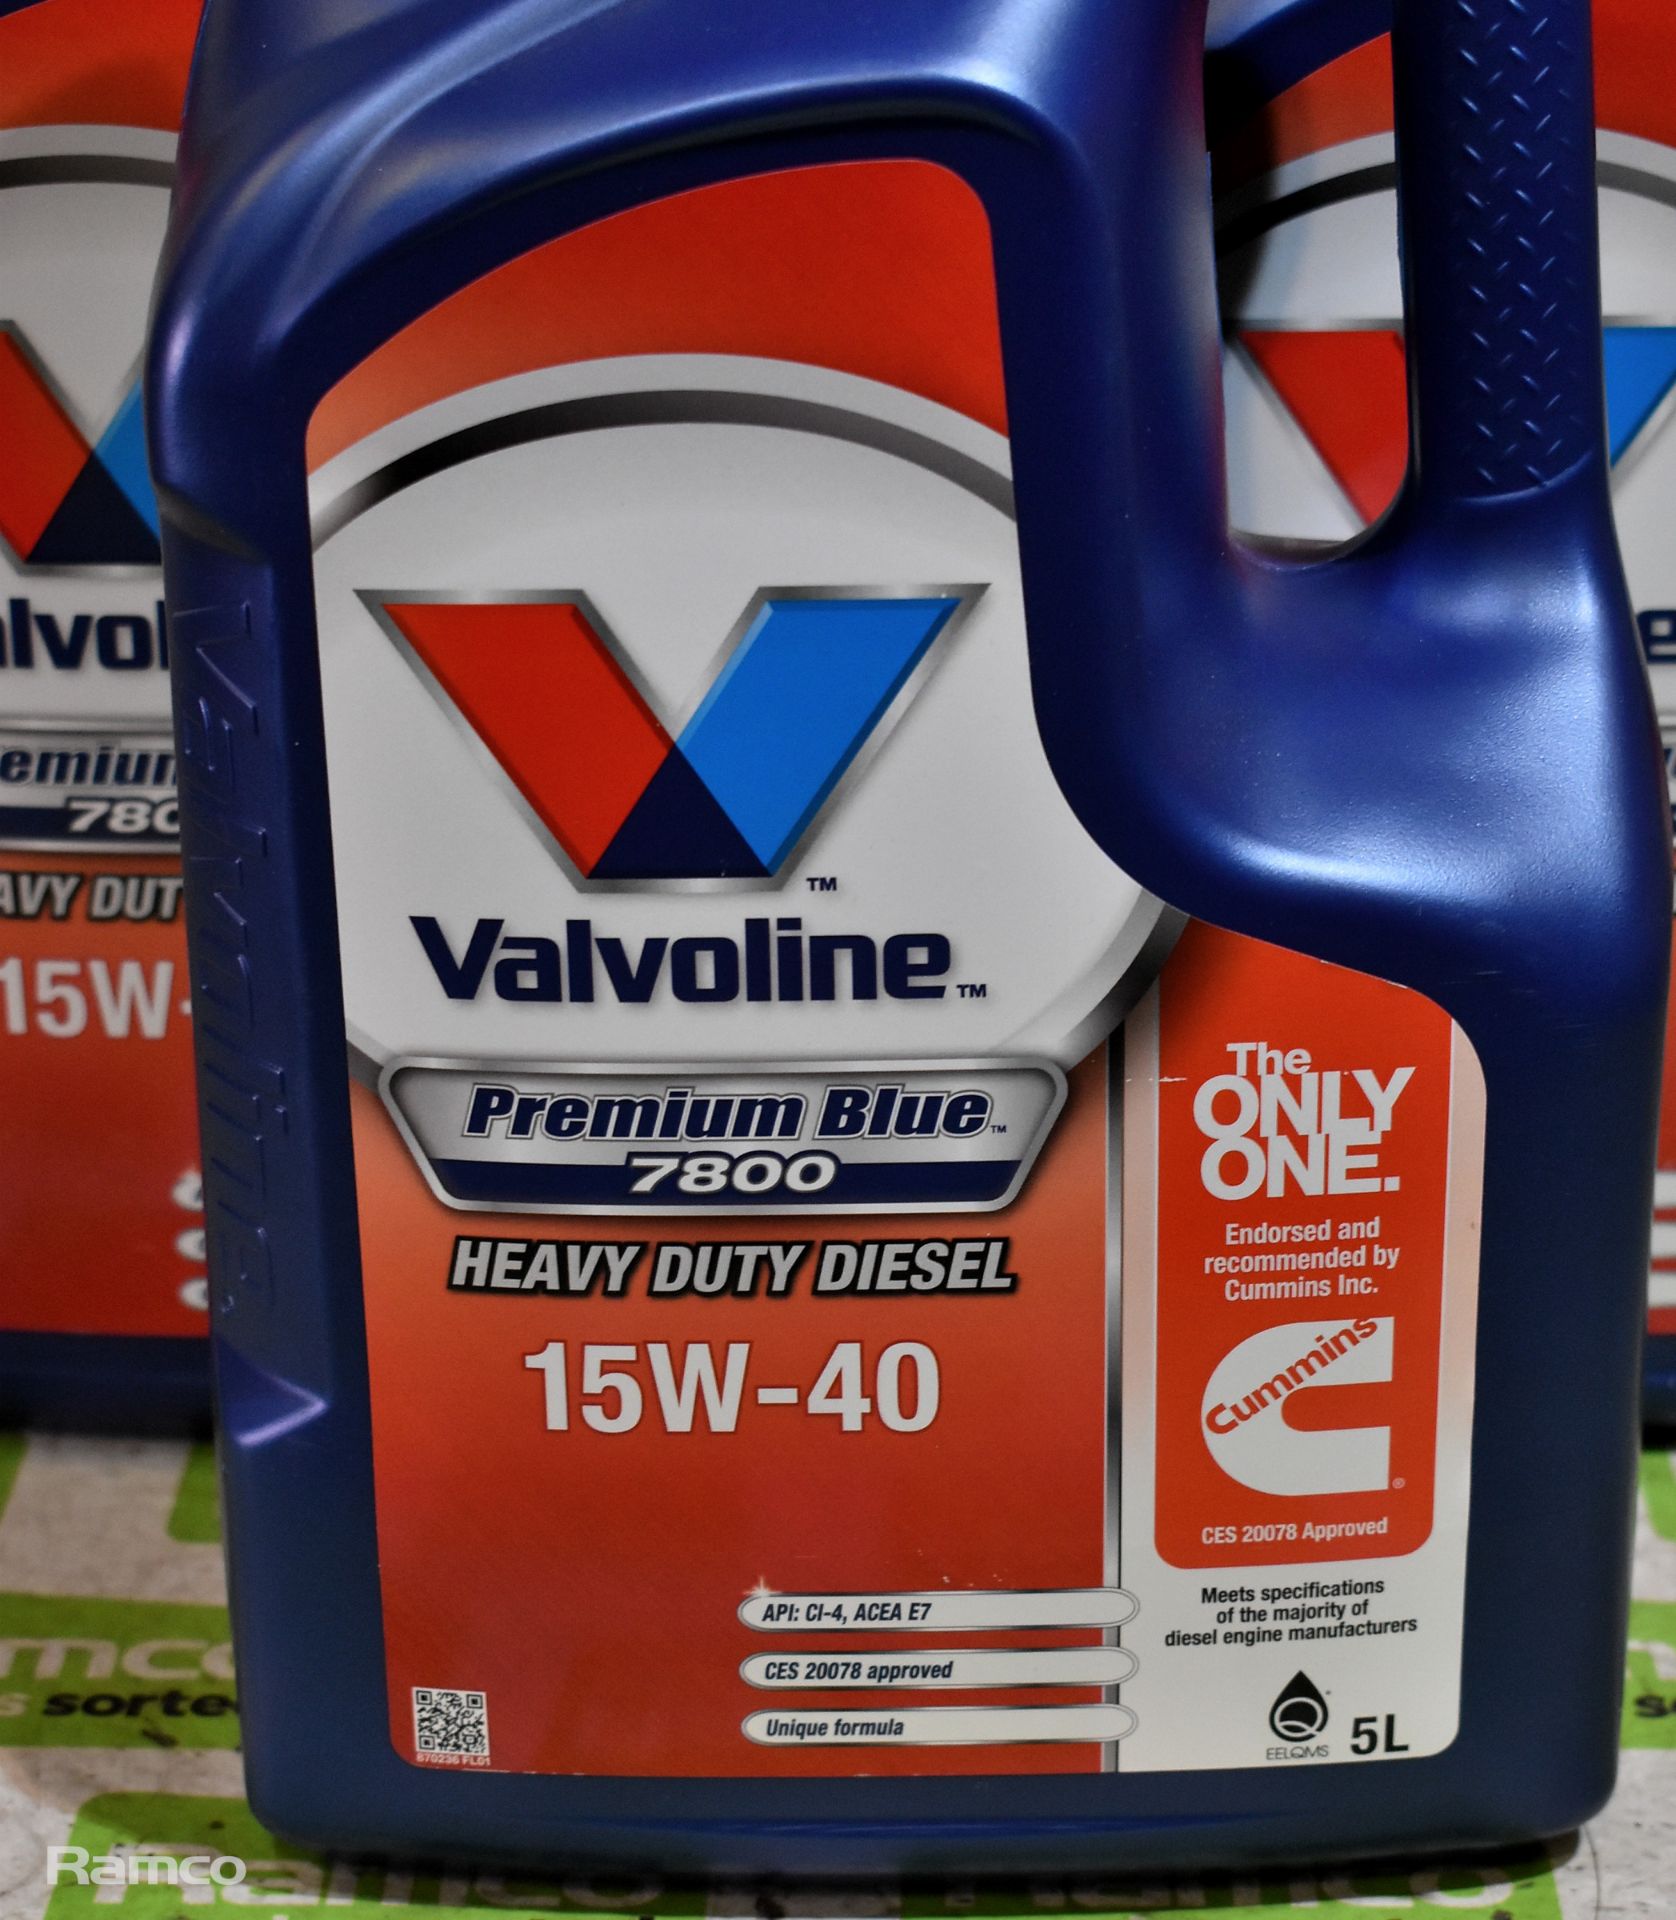 3x 5L bottles of Valvoline Premium Blue 7800 15W-40 heavy duty diesel oil - Image 2 of 3